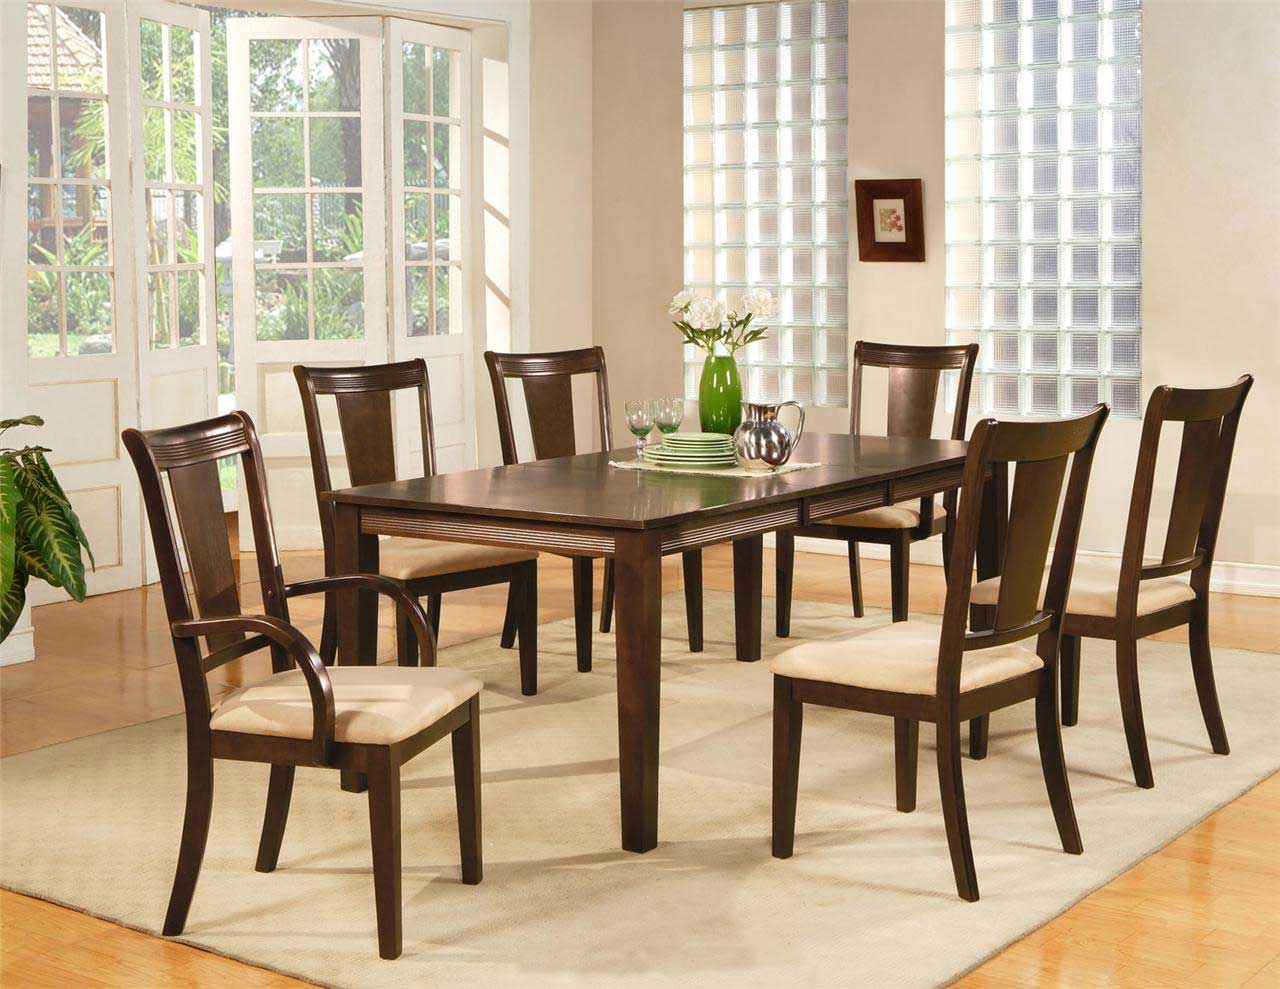 simple elegant dining room designs